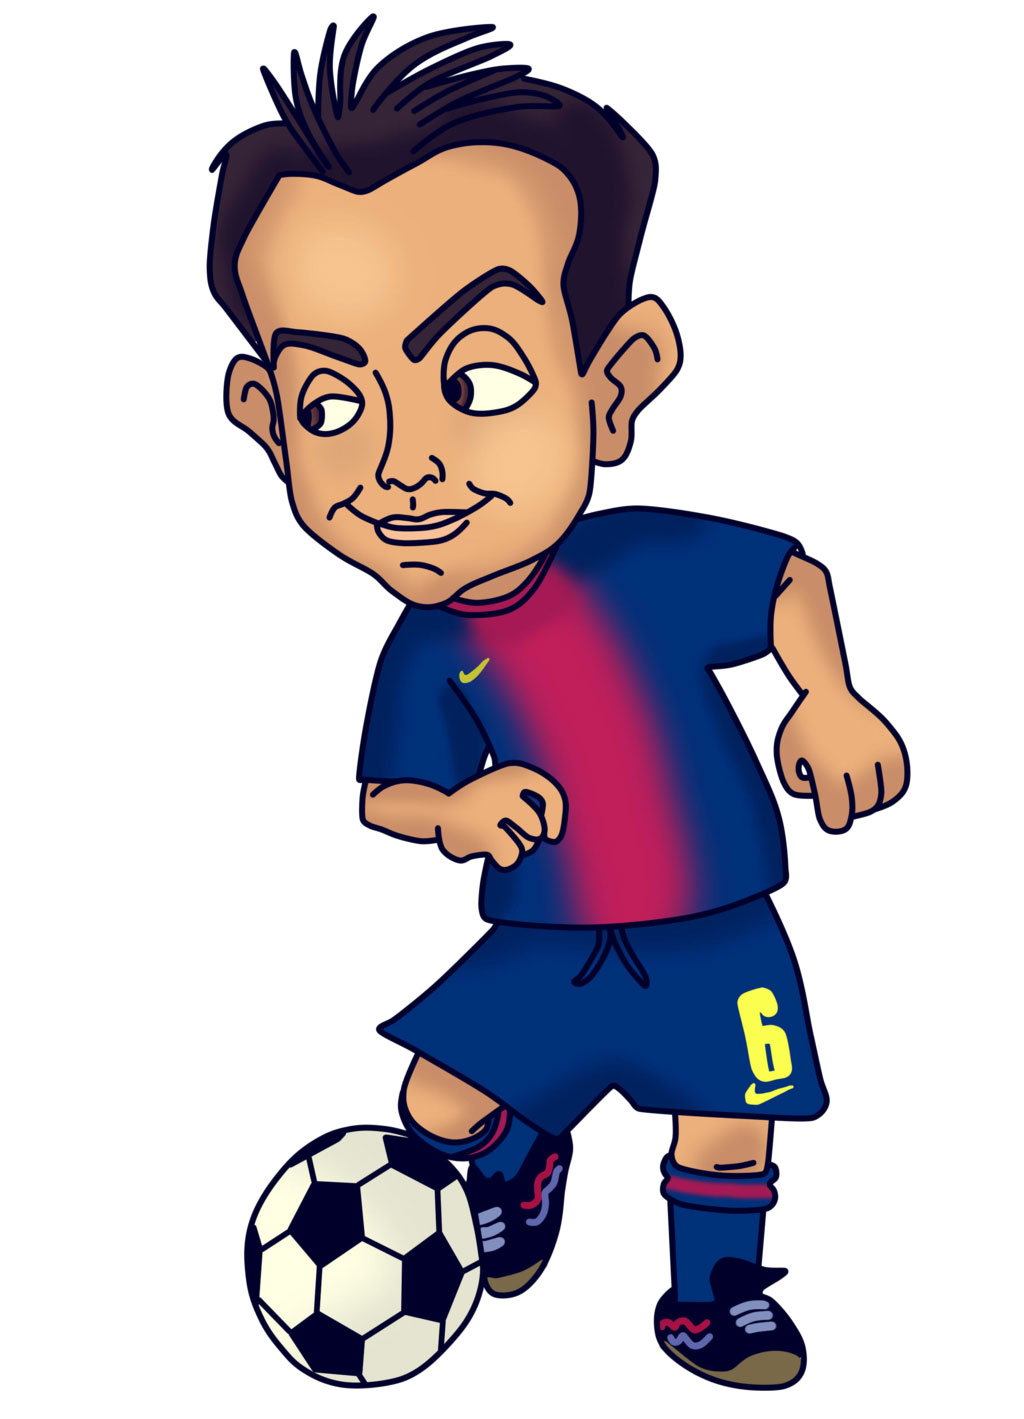 Funny Wallpaper Barcelona Fc - Pro Soccer Player Cartoon - 1024x1419  Wallpaper 